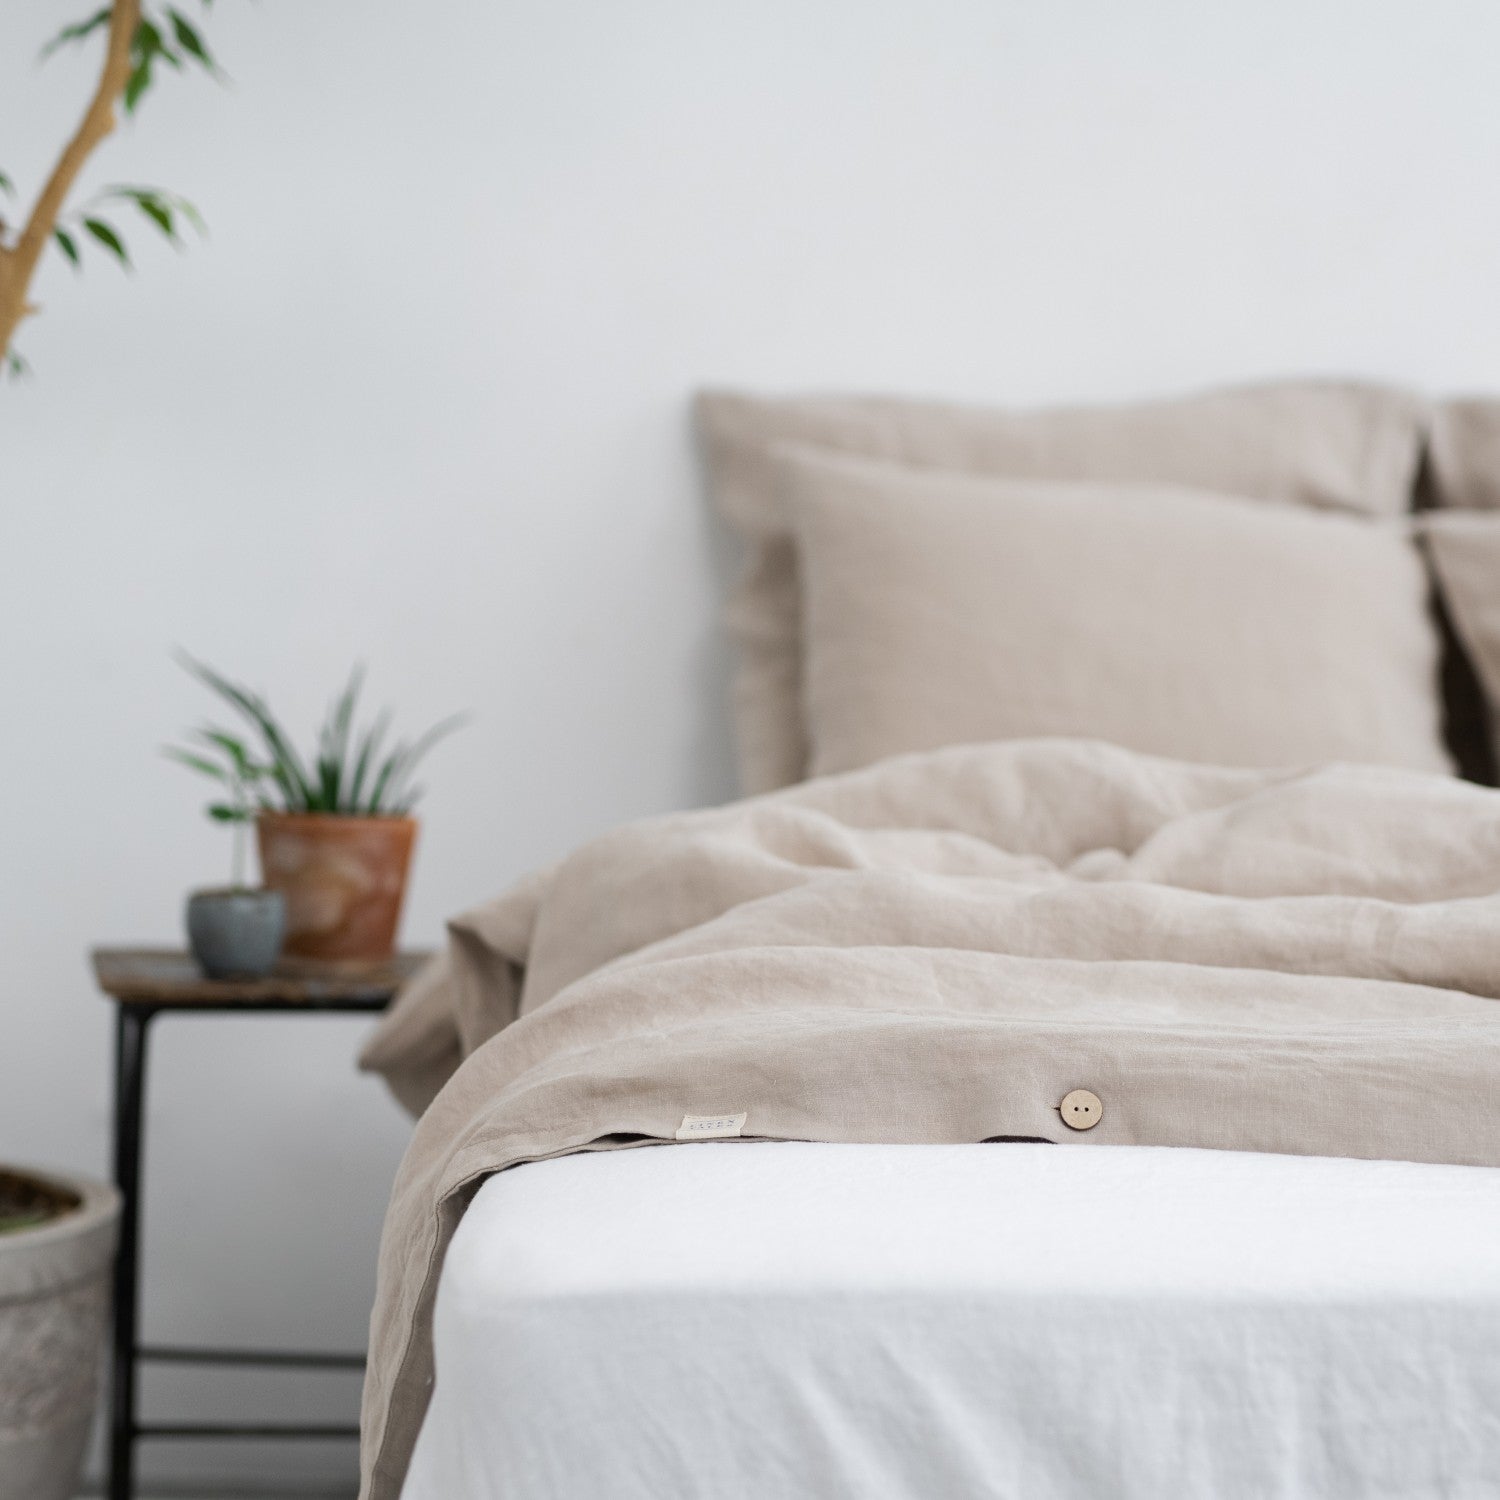 Coria Caress Hemp Comforter - Sustainable Hemp Duvet Cover